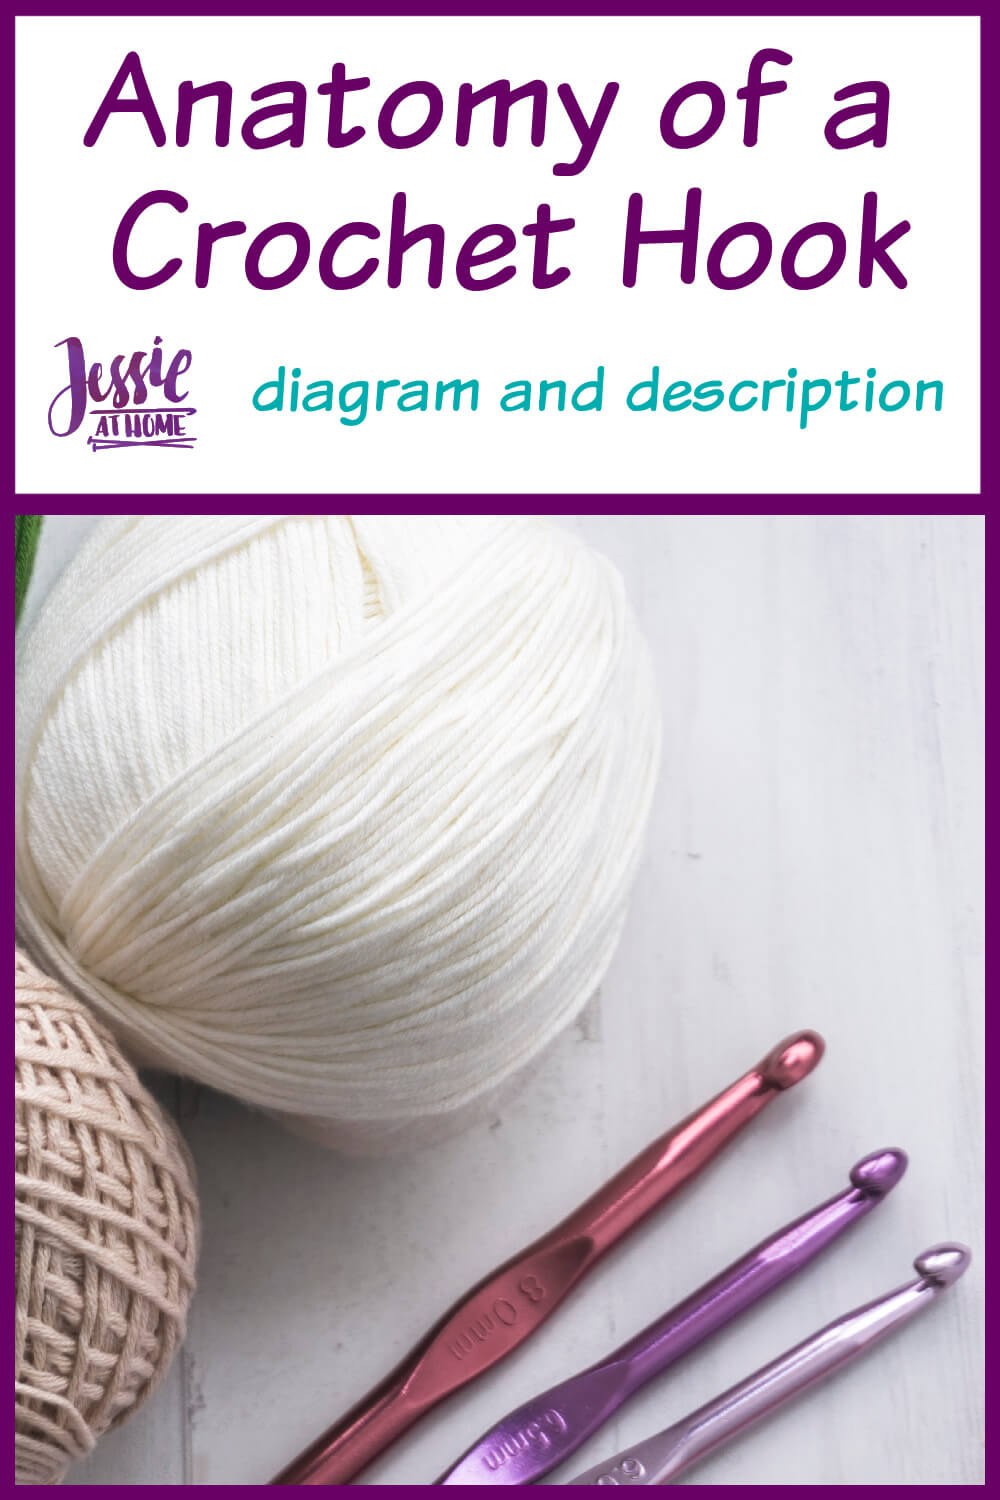 Anatomy of a Crochet Hook - diagram and description